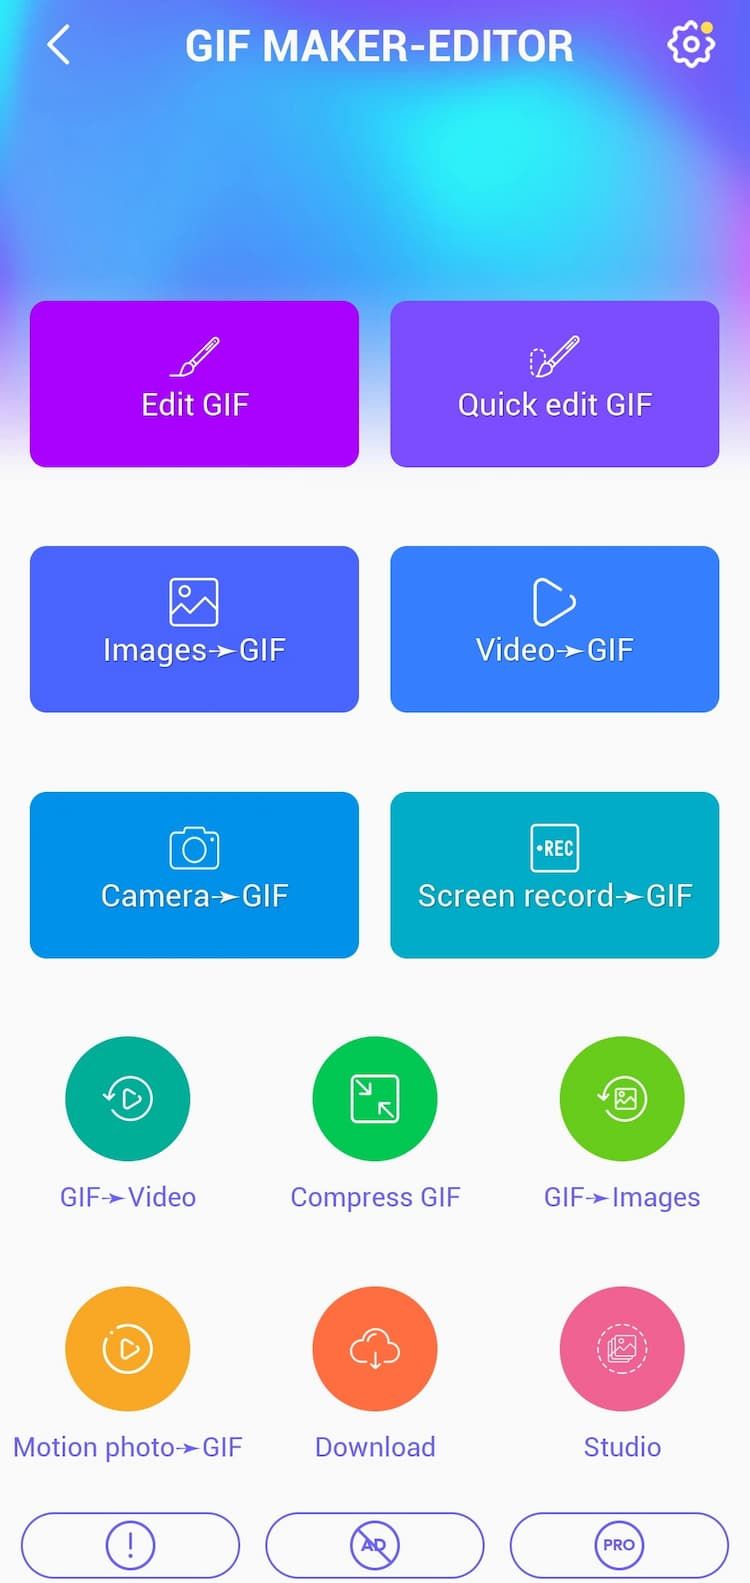 GIF Maker Editor App Home